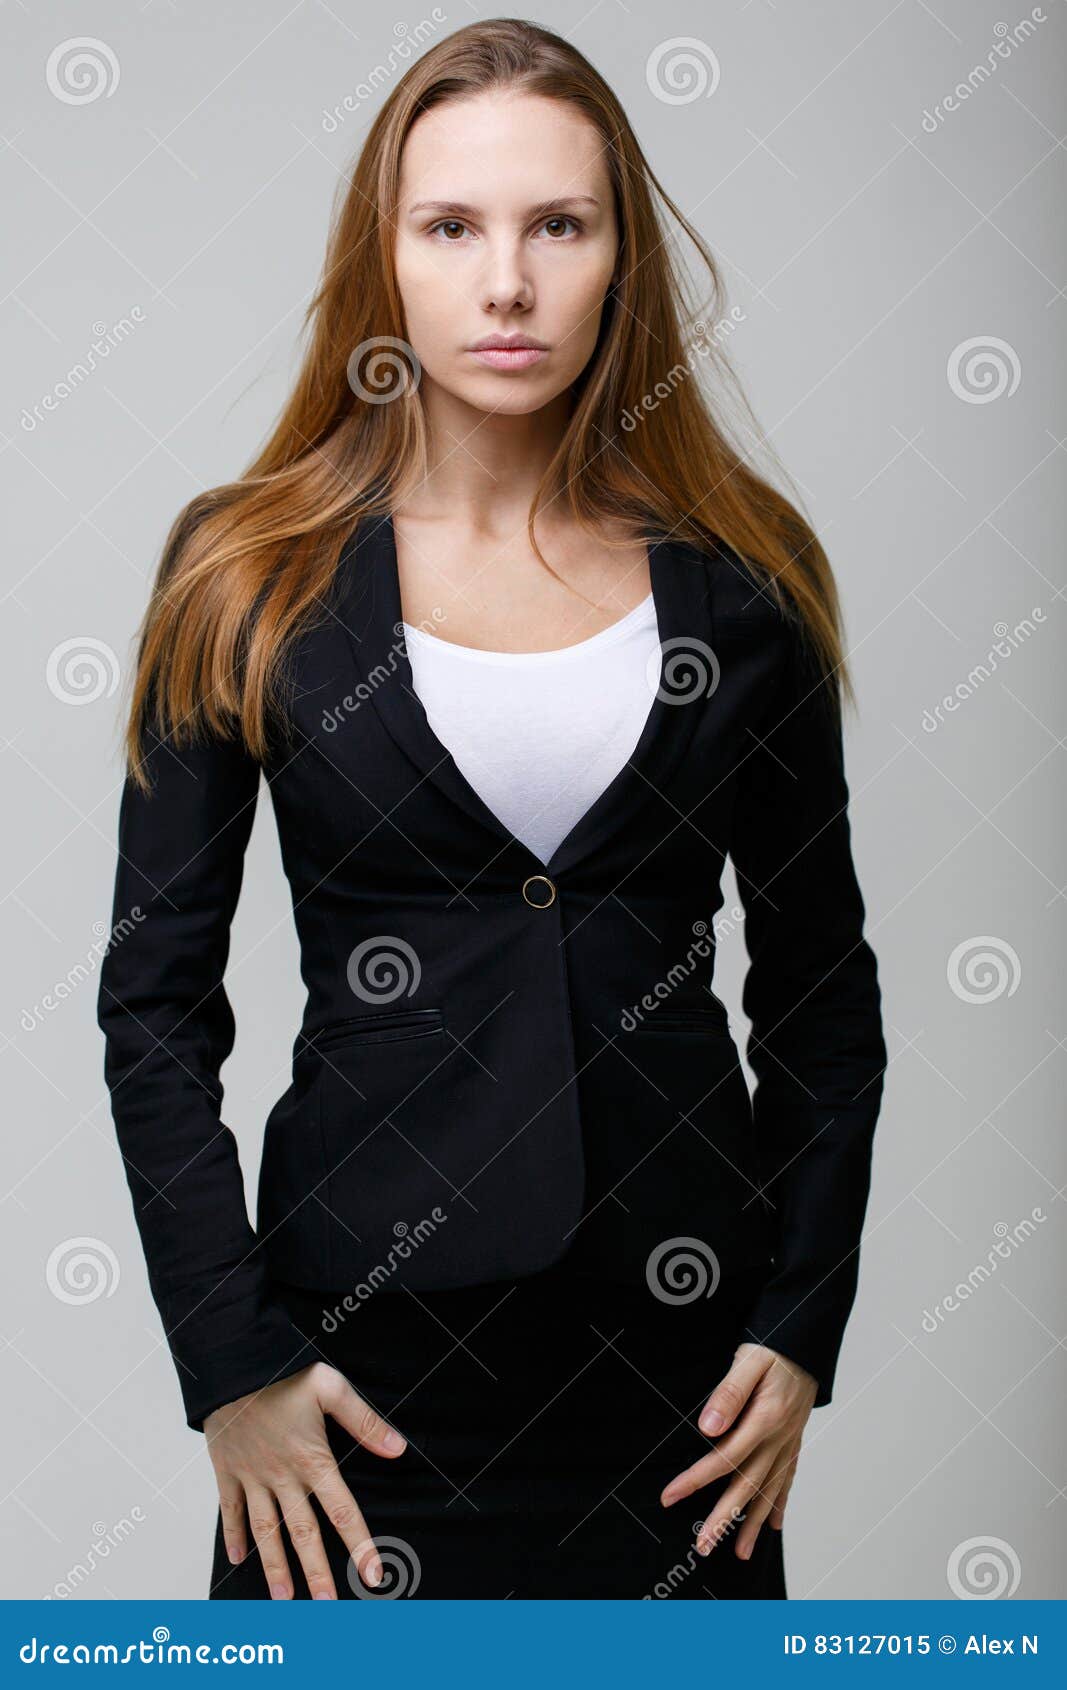 Beautiful Girl in Black Cardigan Stock Image - Image of light, elegant ...